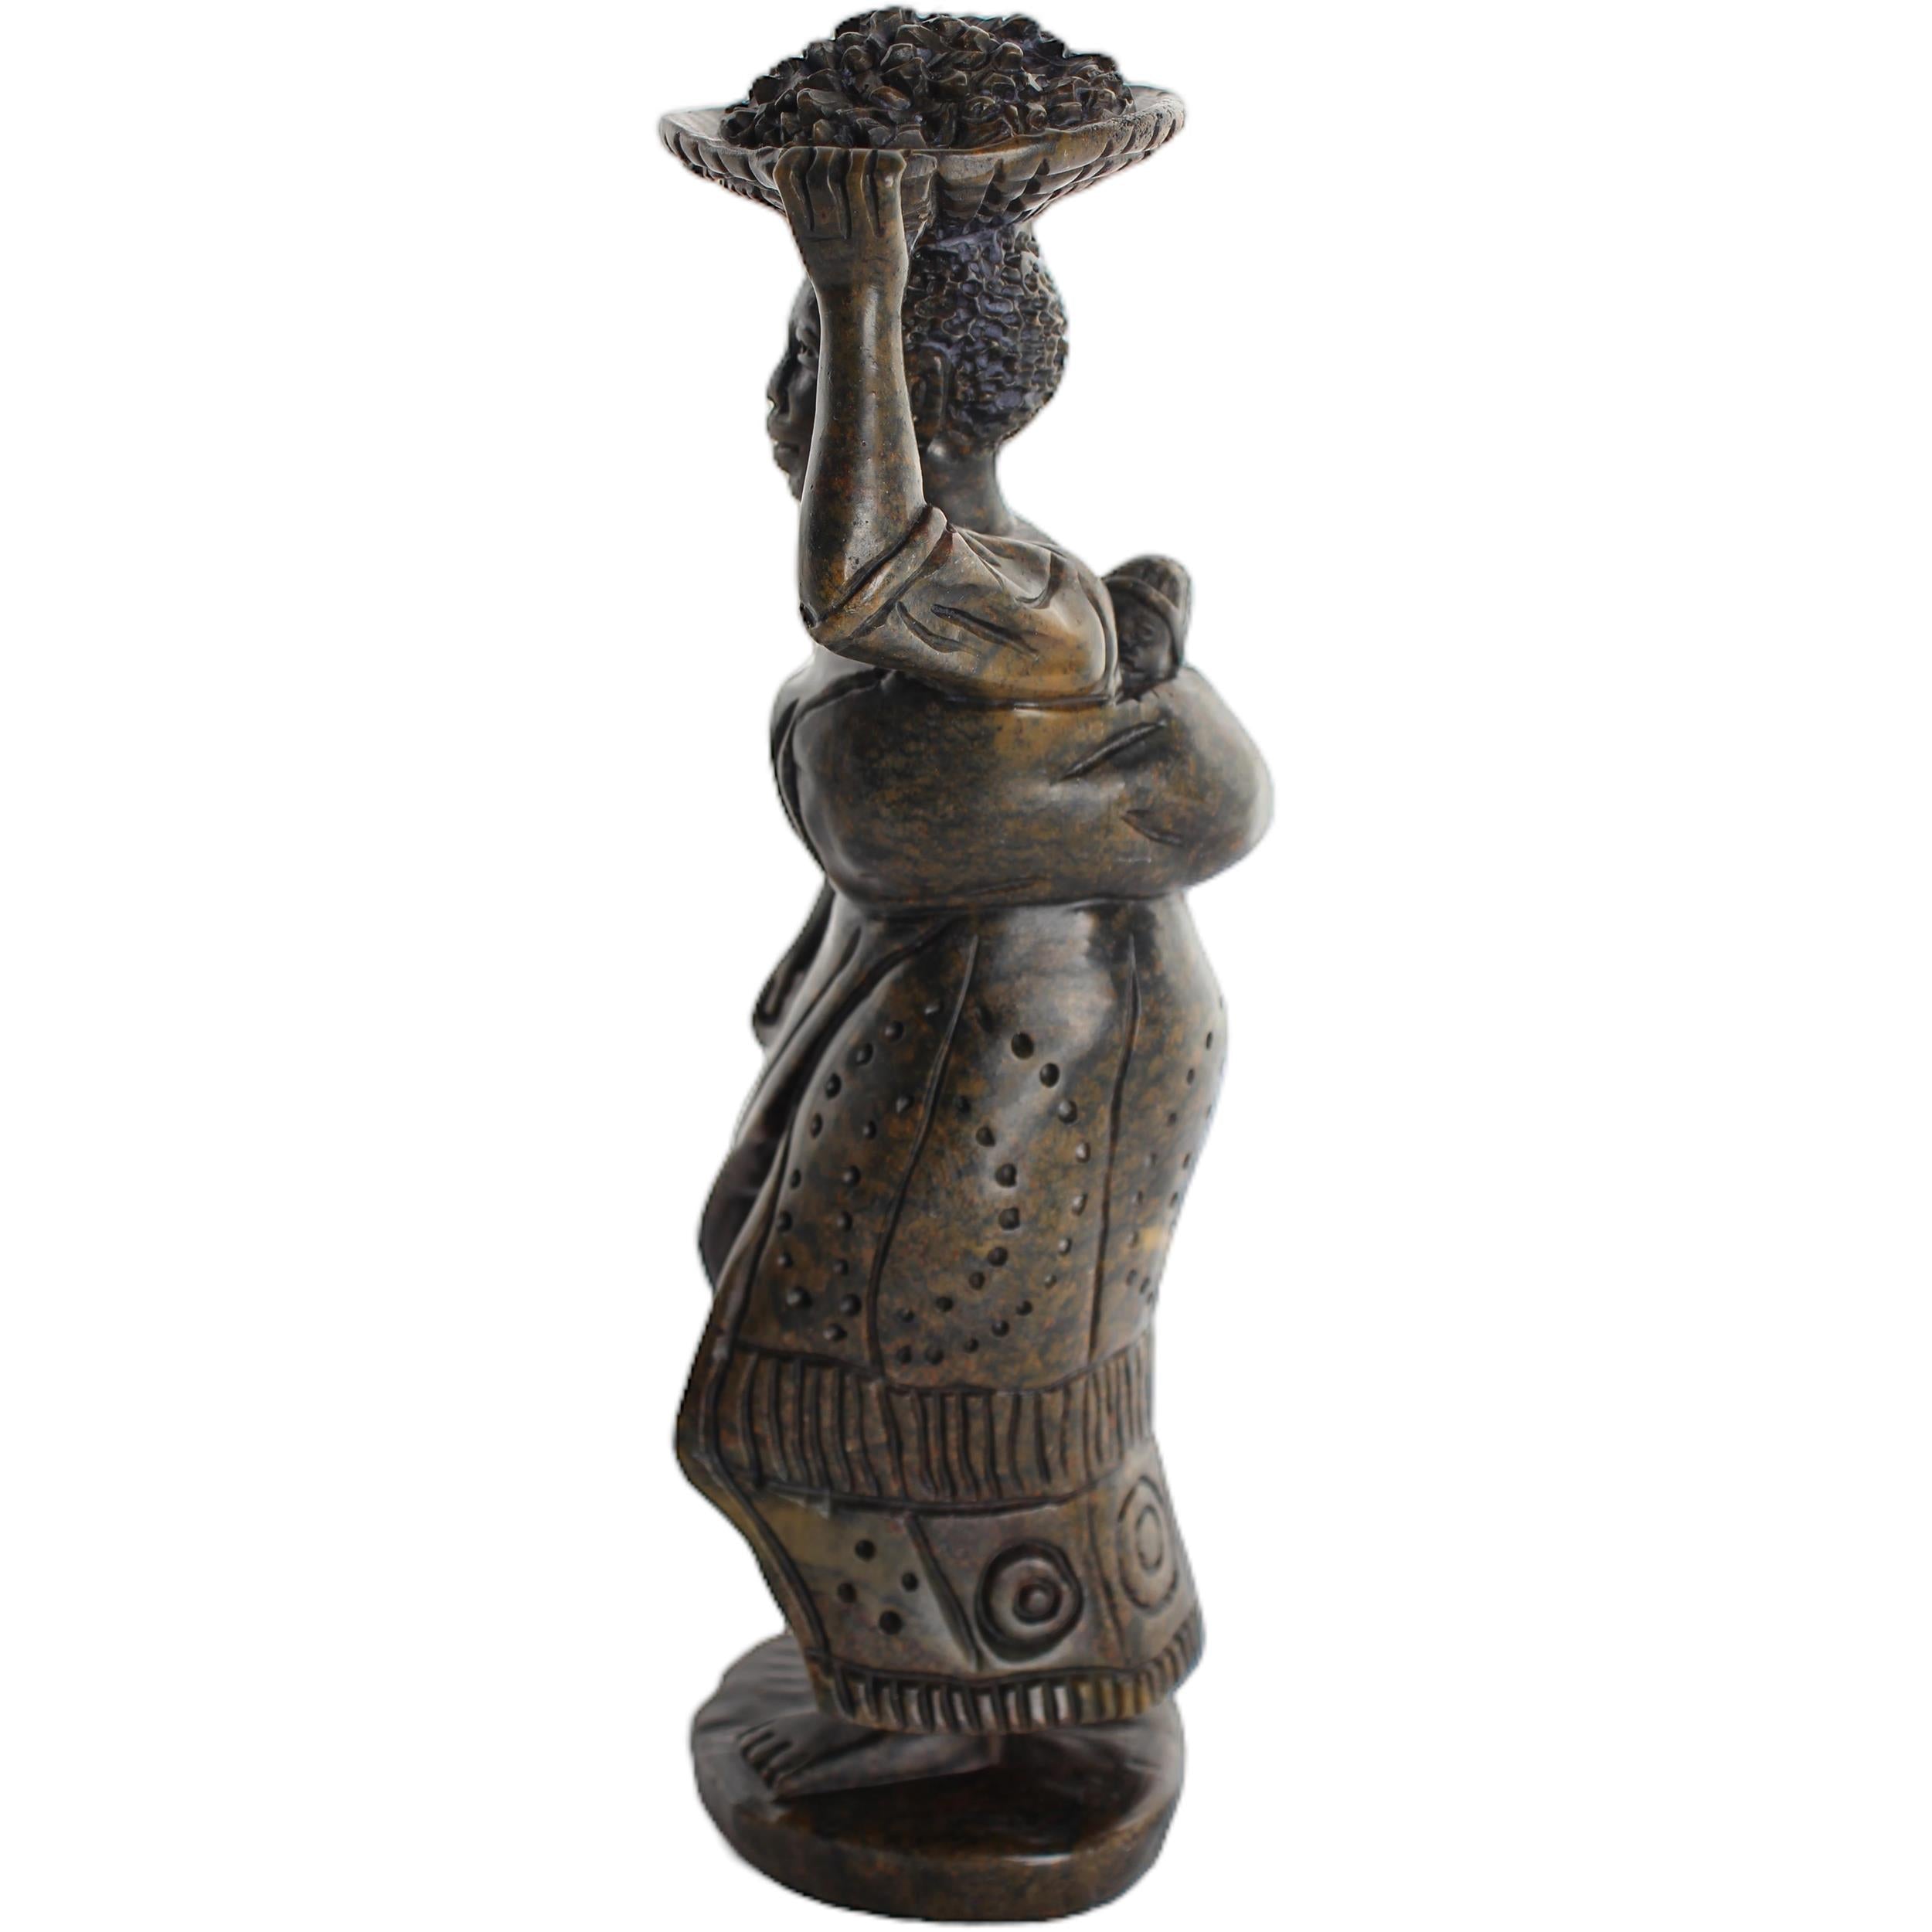 Shona Tribe Serpentine Stone Warrior Figure ~9.4" Tall